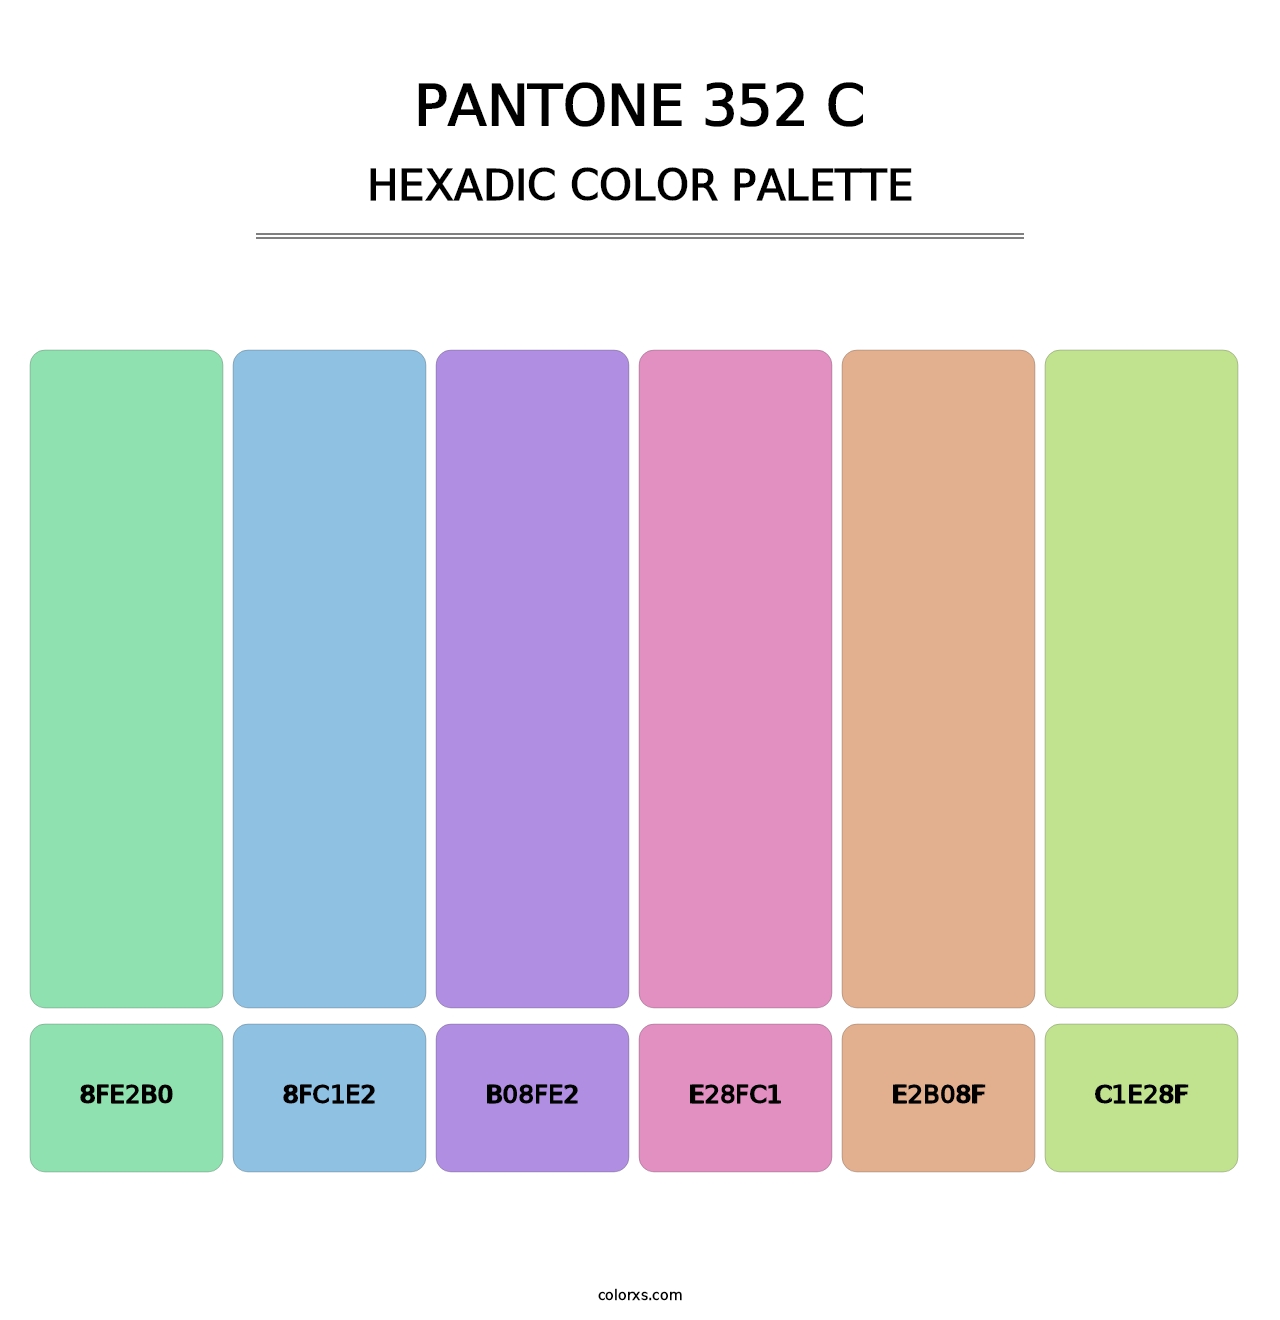 PANTONE 352 C - Hexadic Color Palette